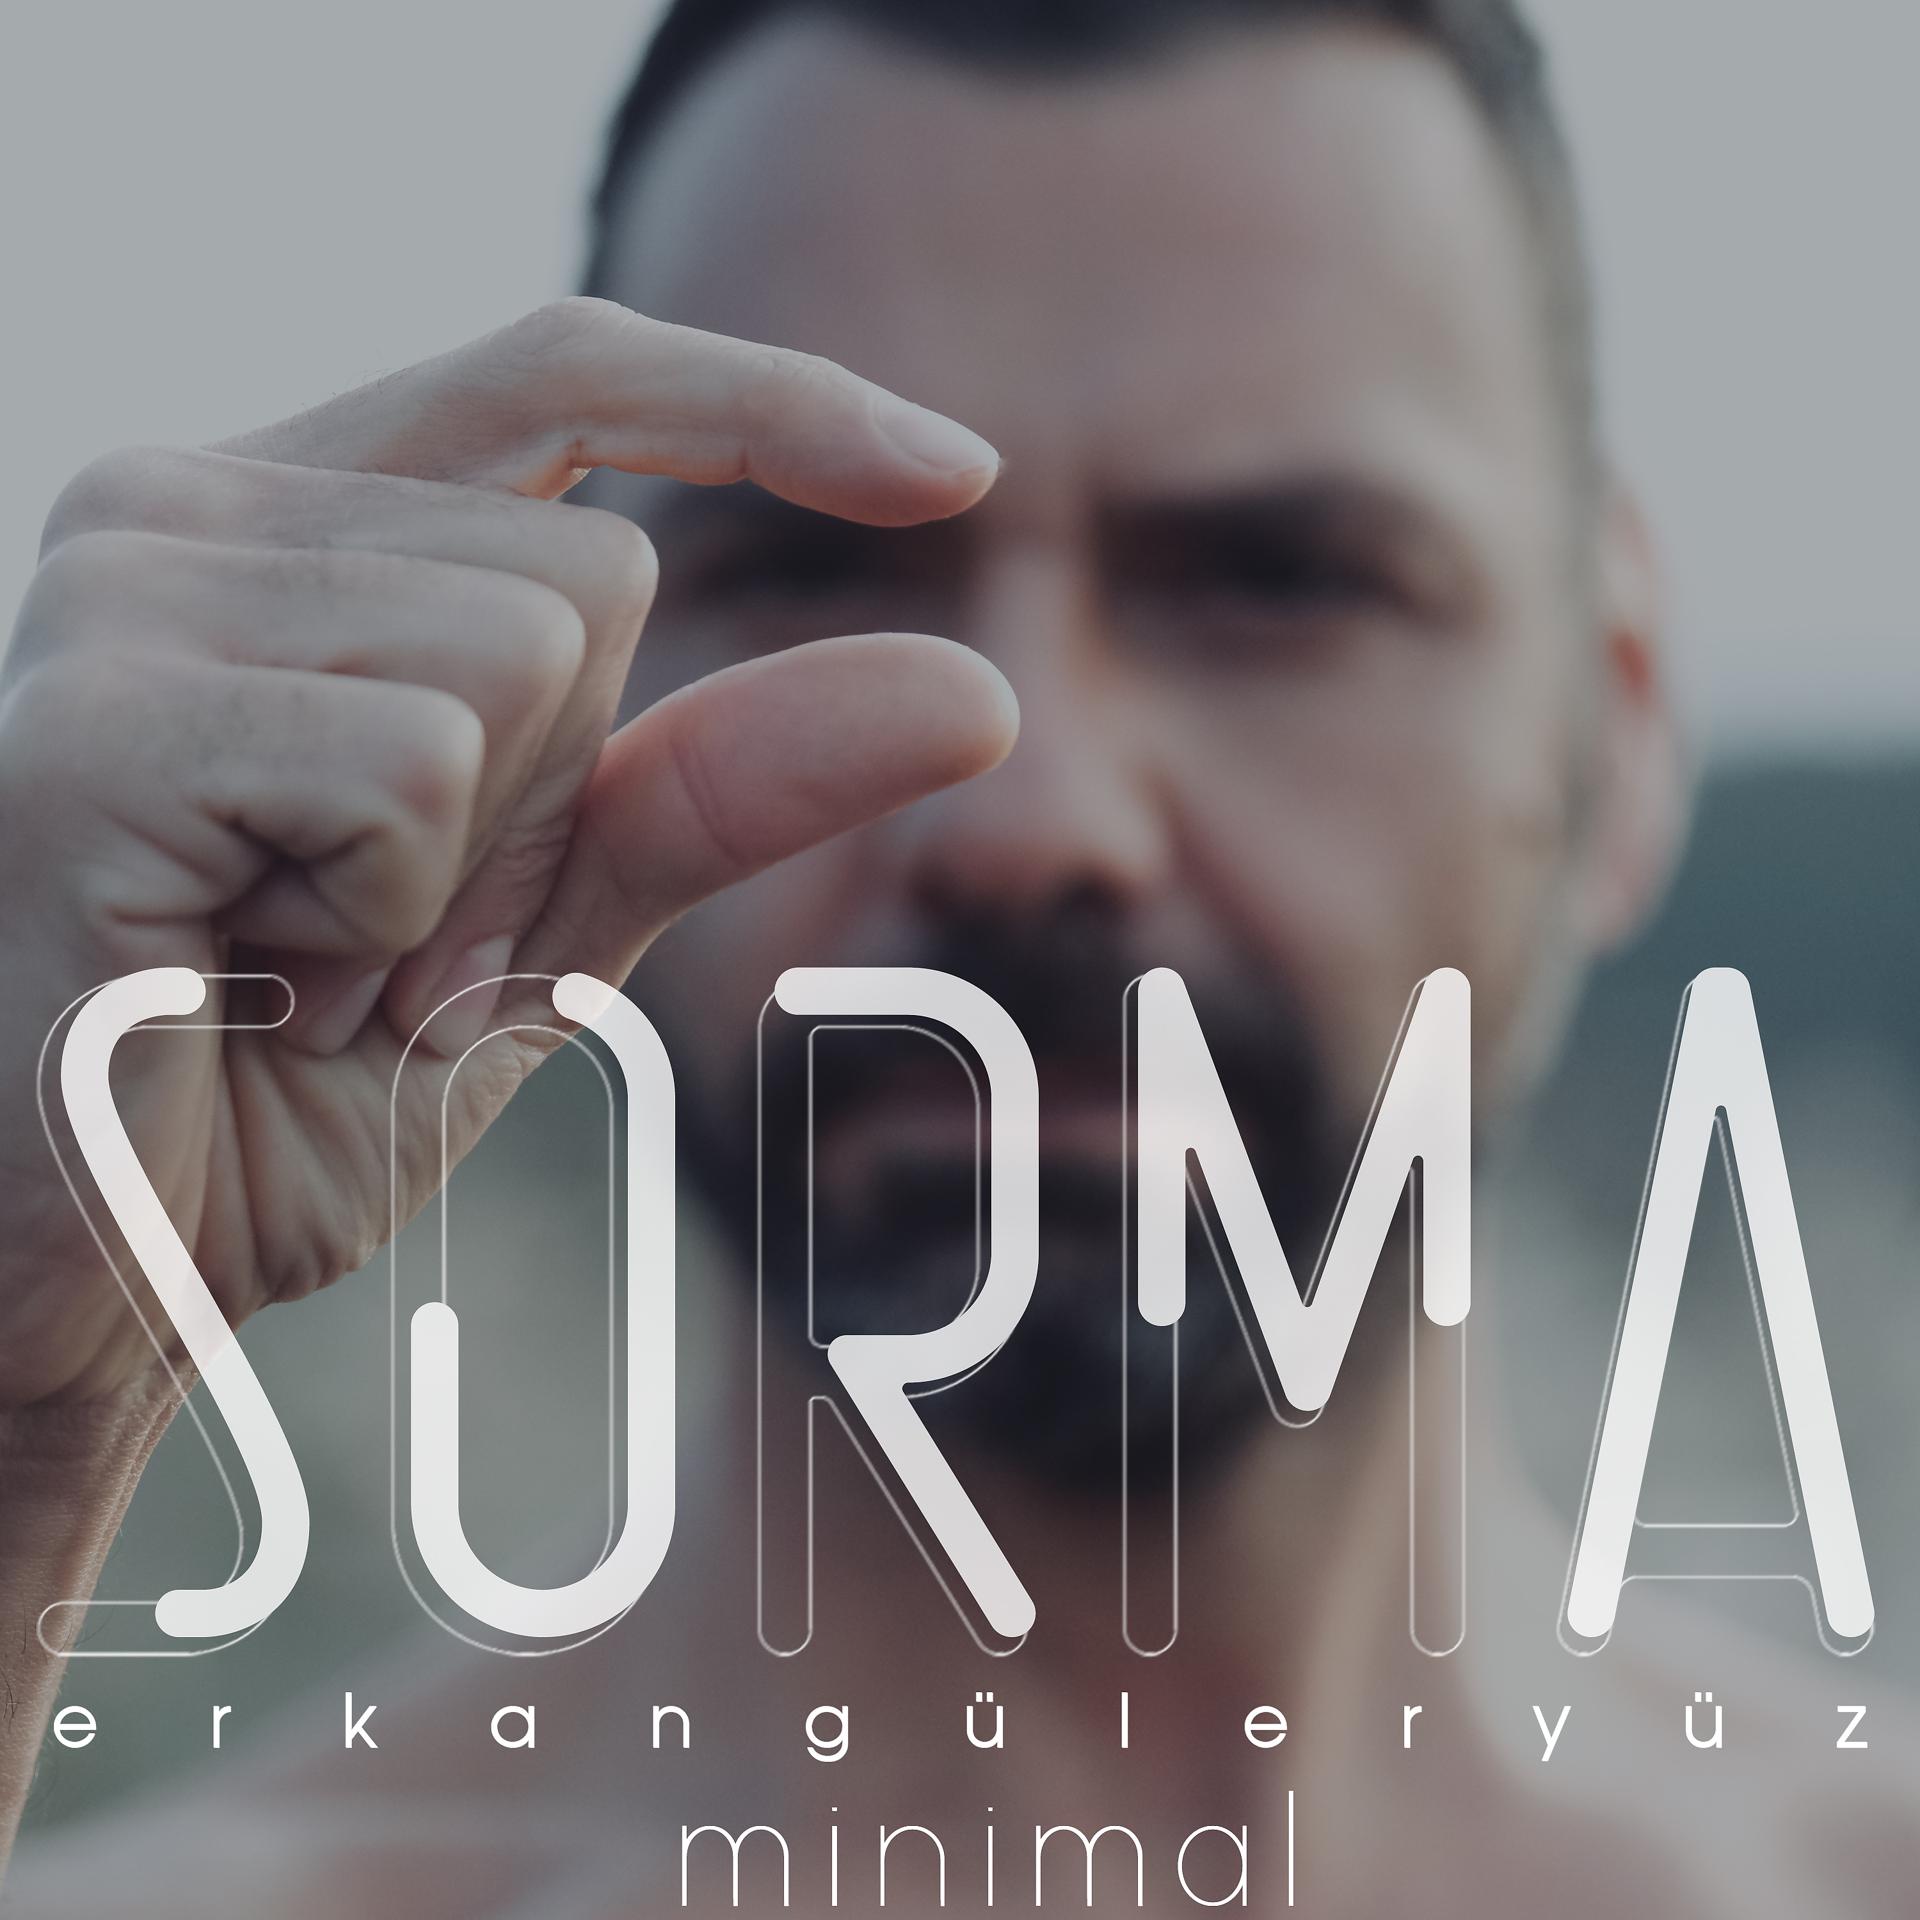 Постер альбома Sorma